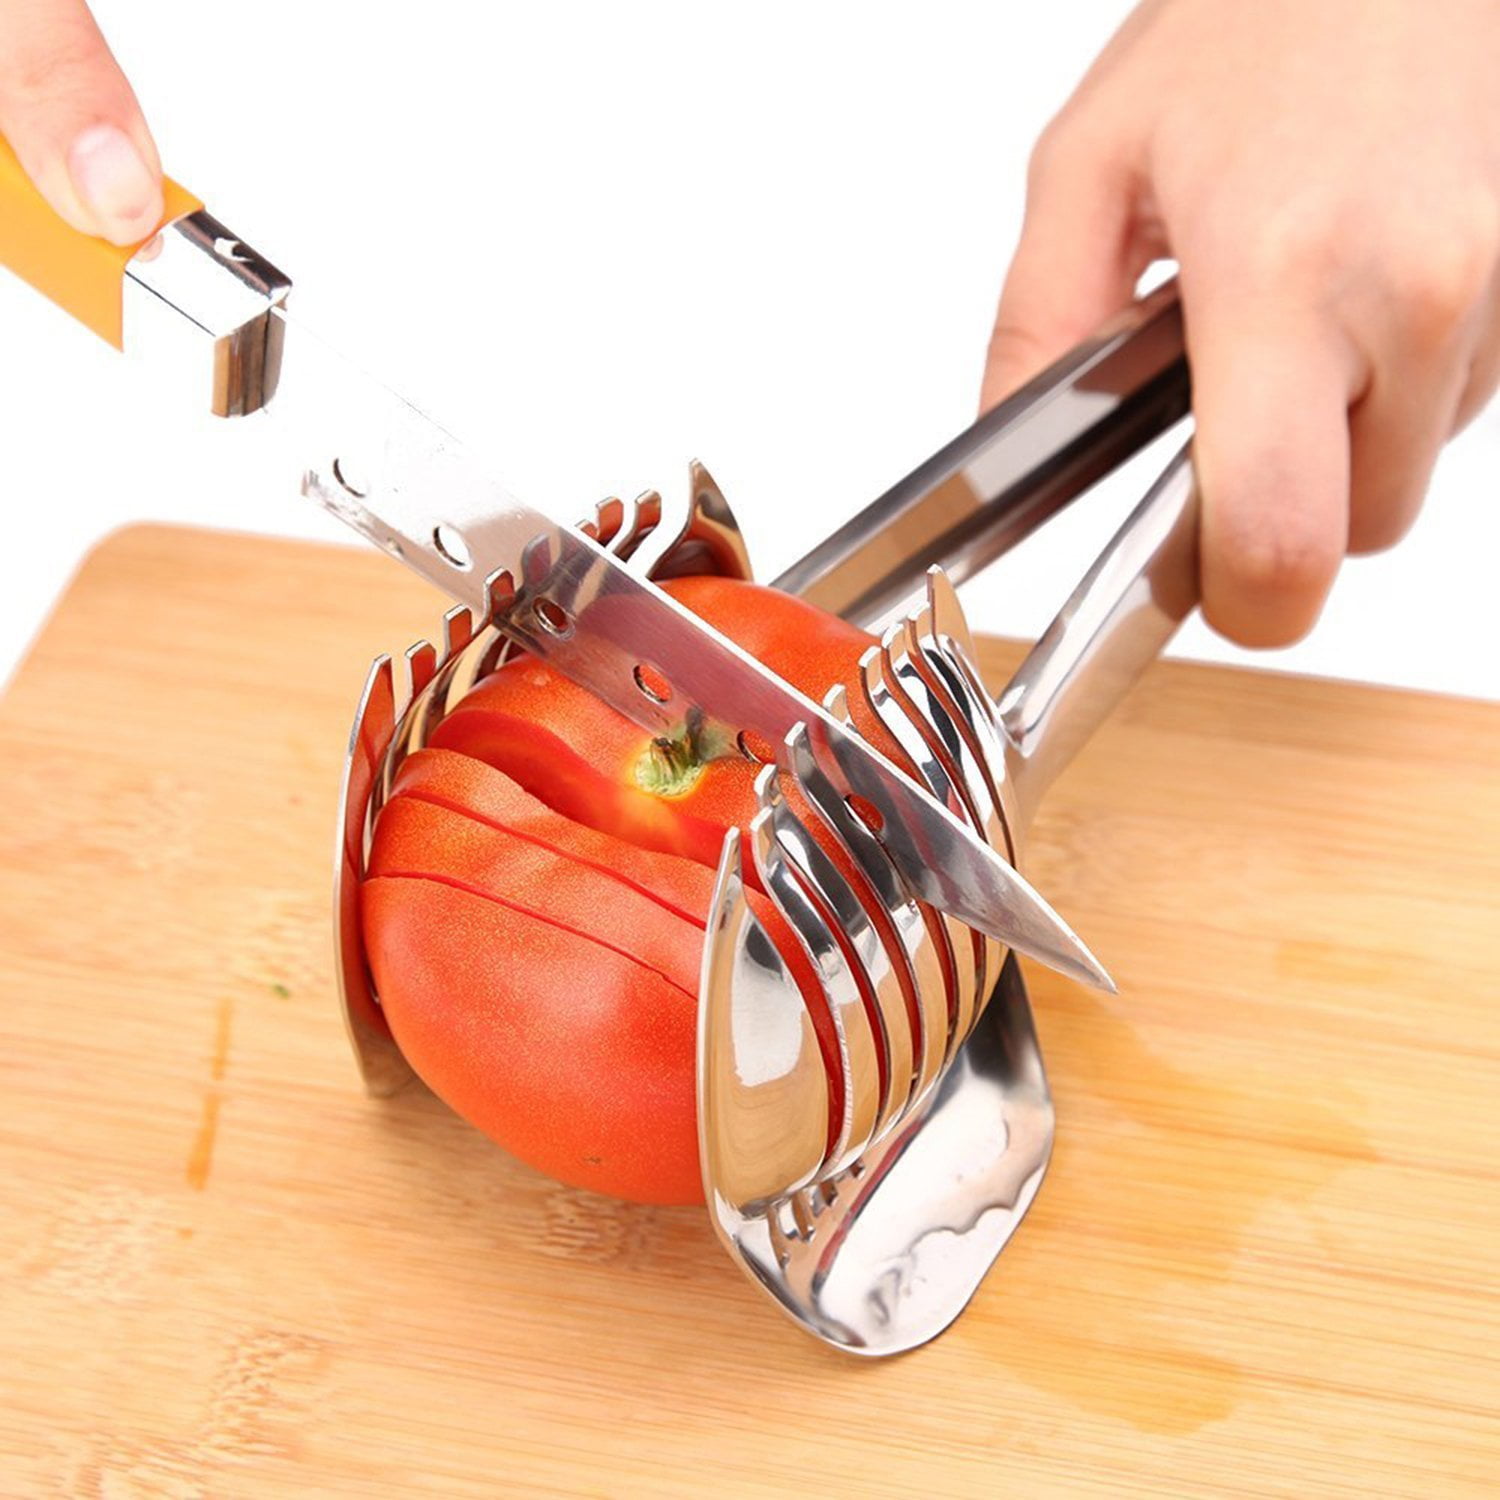 Kitchen Tomato Slicer, Lemon Apple Slicer, Kitchen Accessories Fruit Slicer